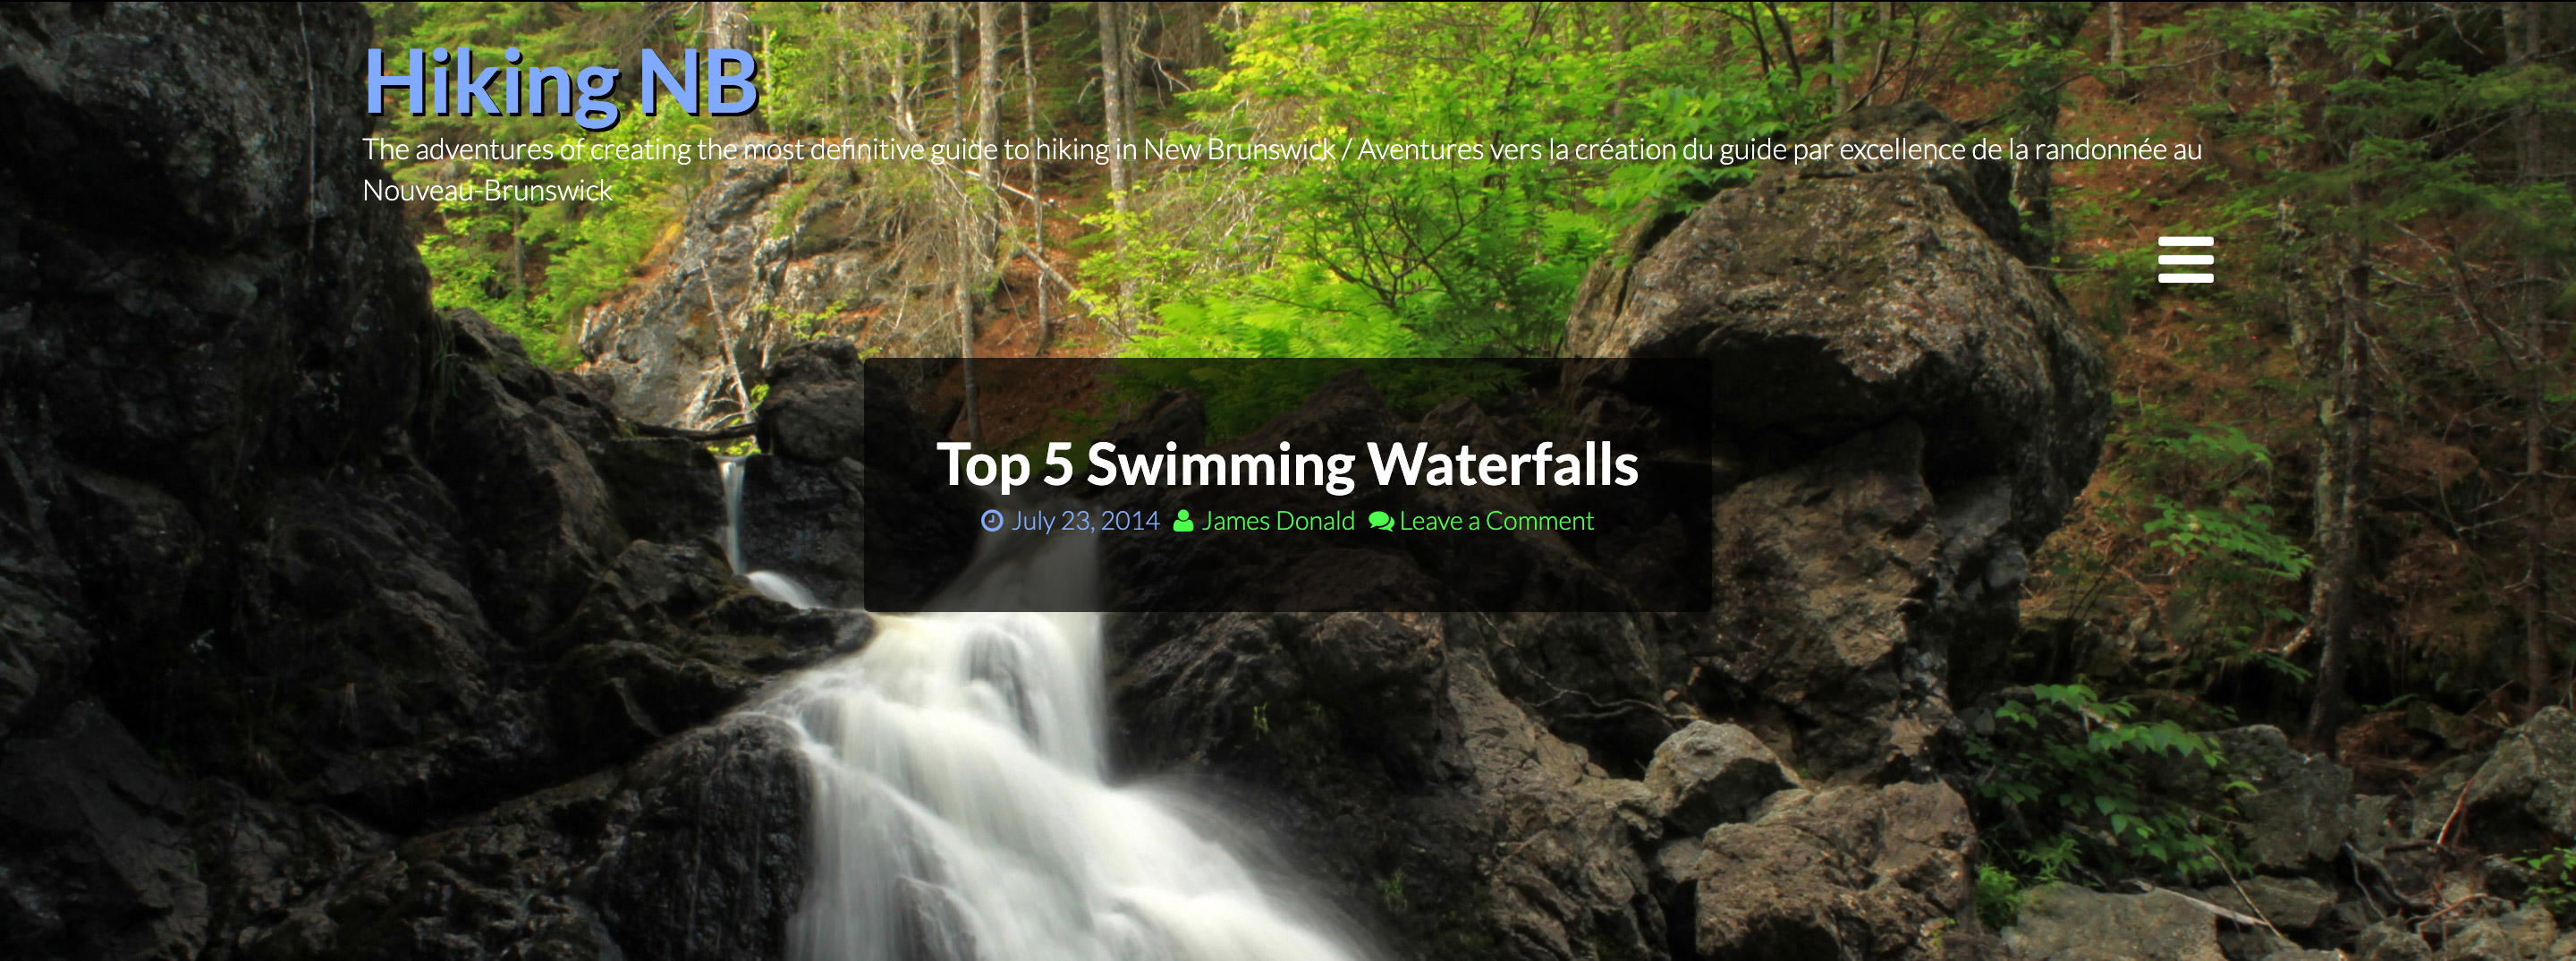 Top 5 Swimming Waterfalls Blog Post